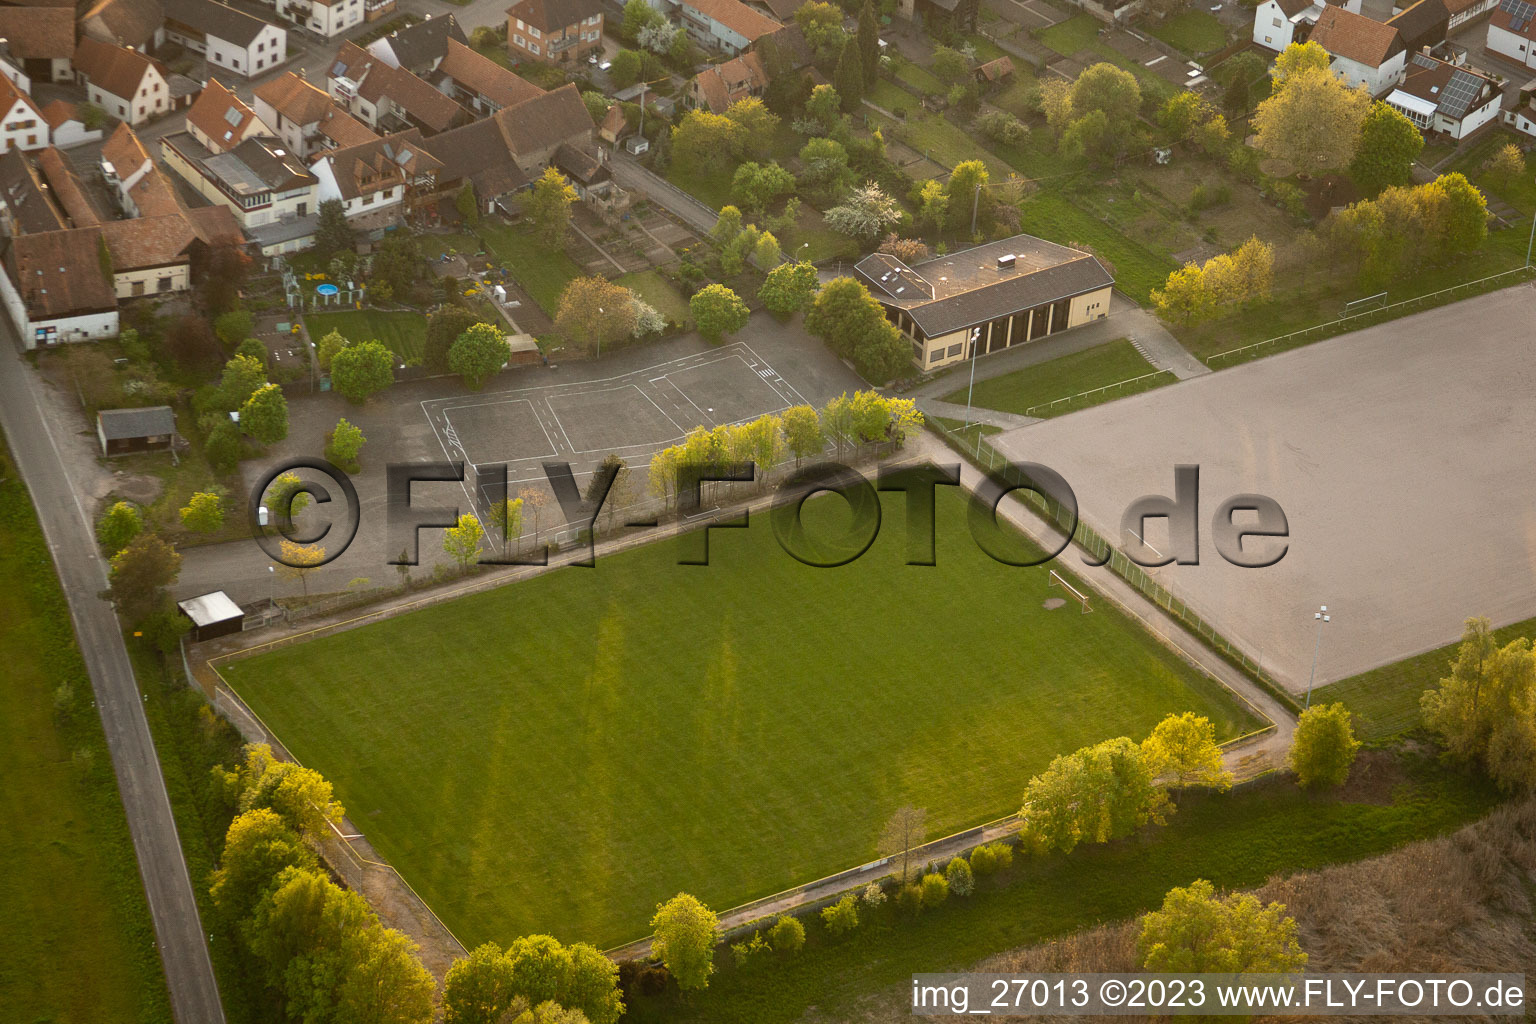 Soccer fields in the district Büchelberg in Wörth am Rhein in the state Rhineland-Palatinate, Germany